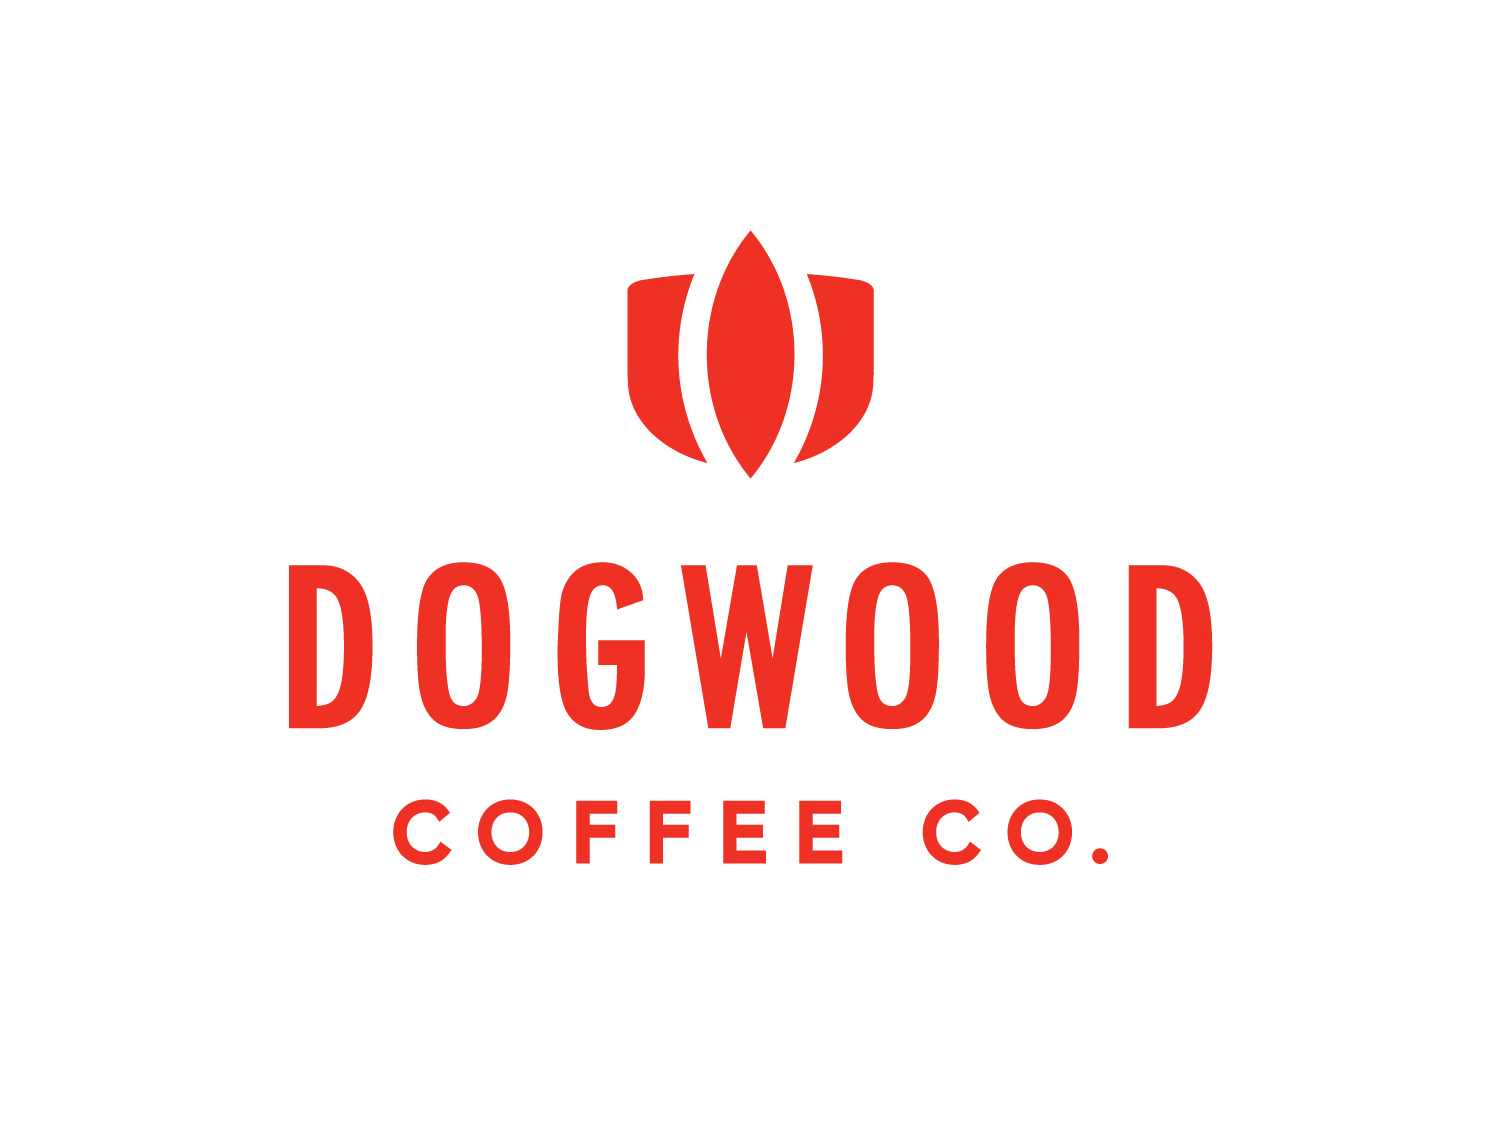 Dogwood-Coffee-Co-logo-03.jpg